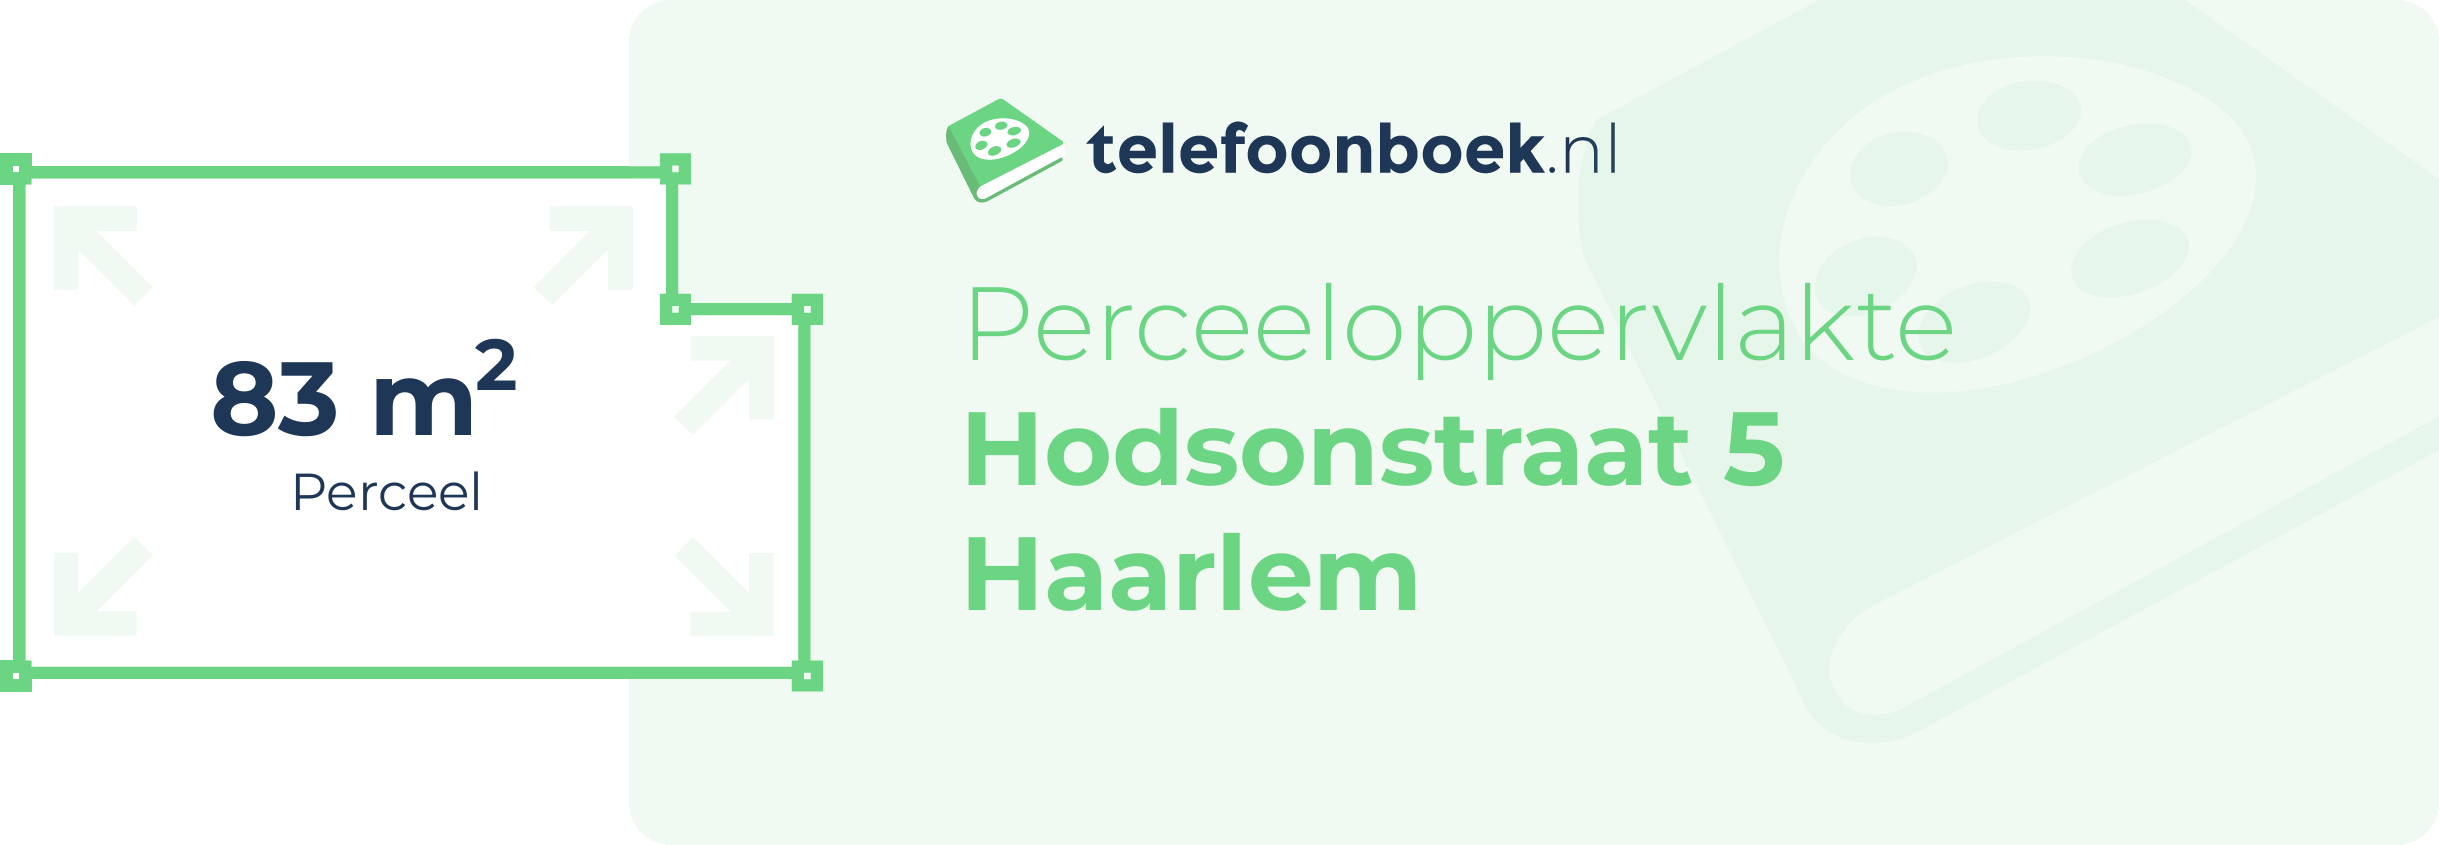 Perceeloppervlakte Hodsonstraat 5 Haarlem